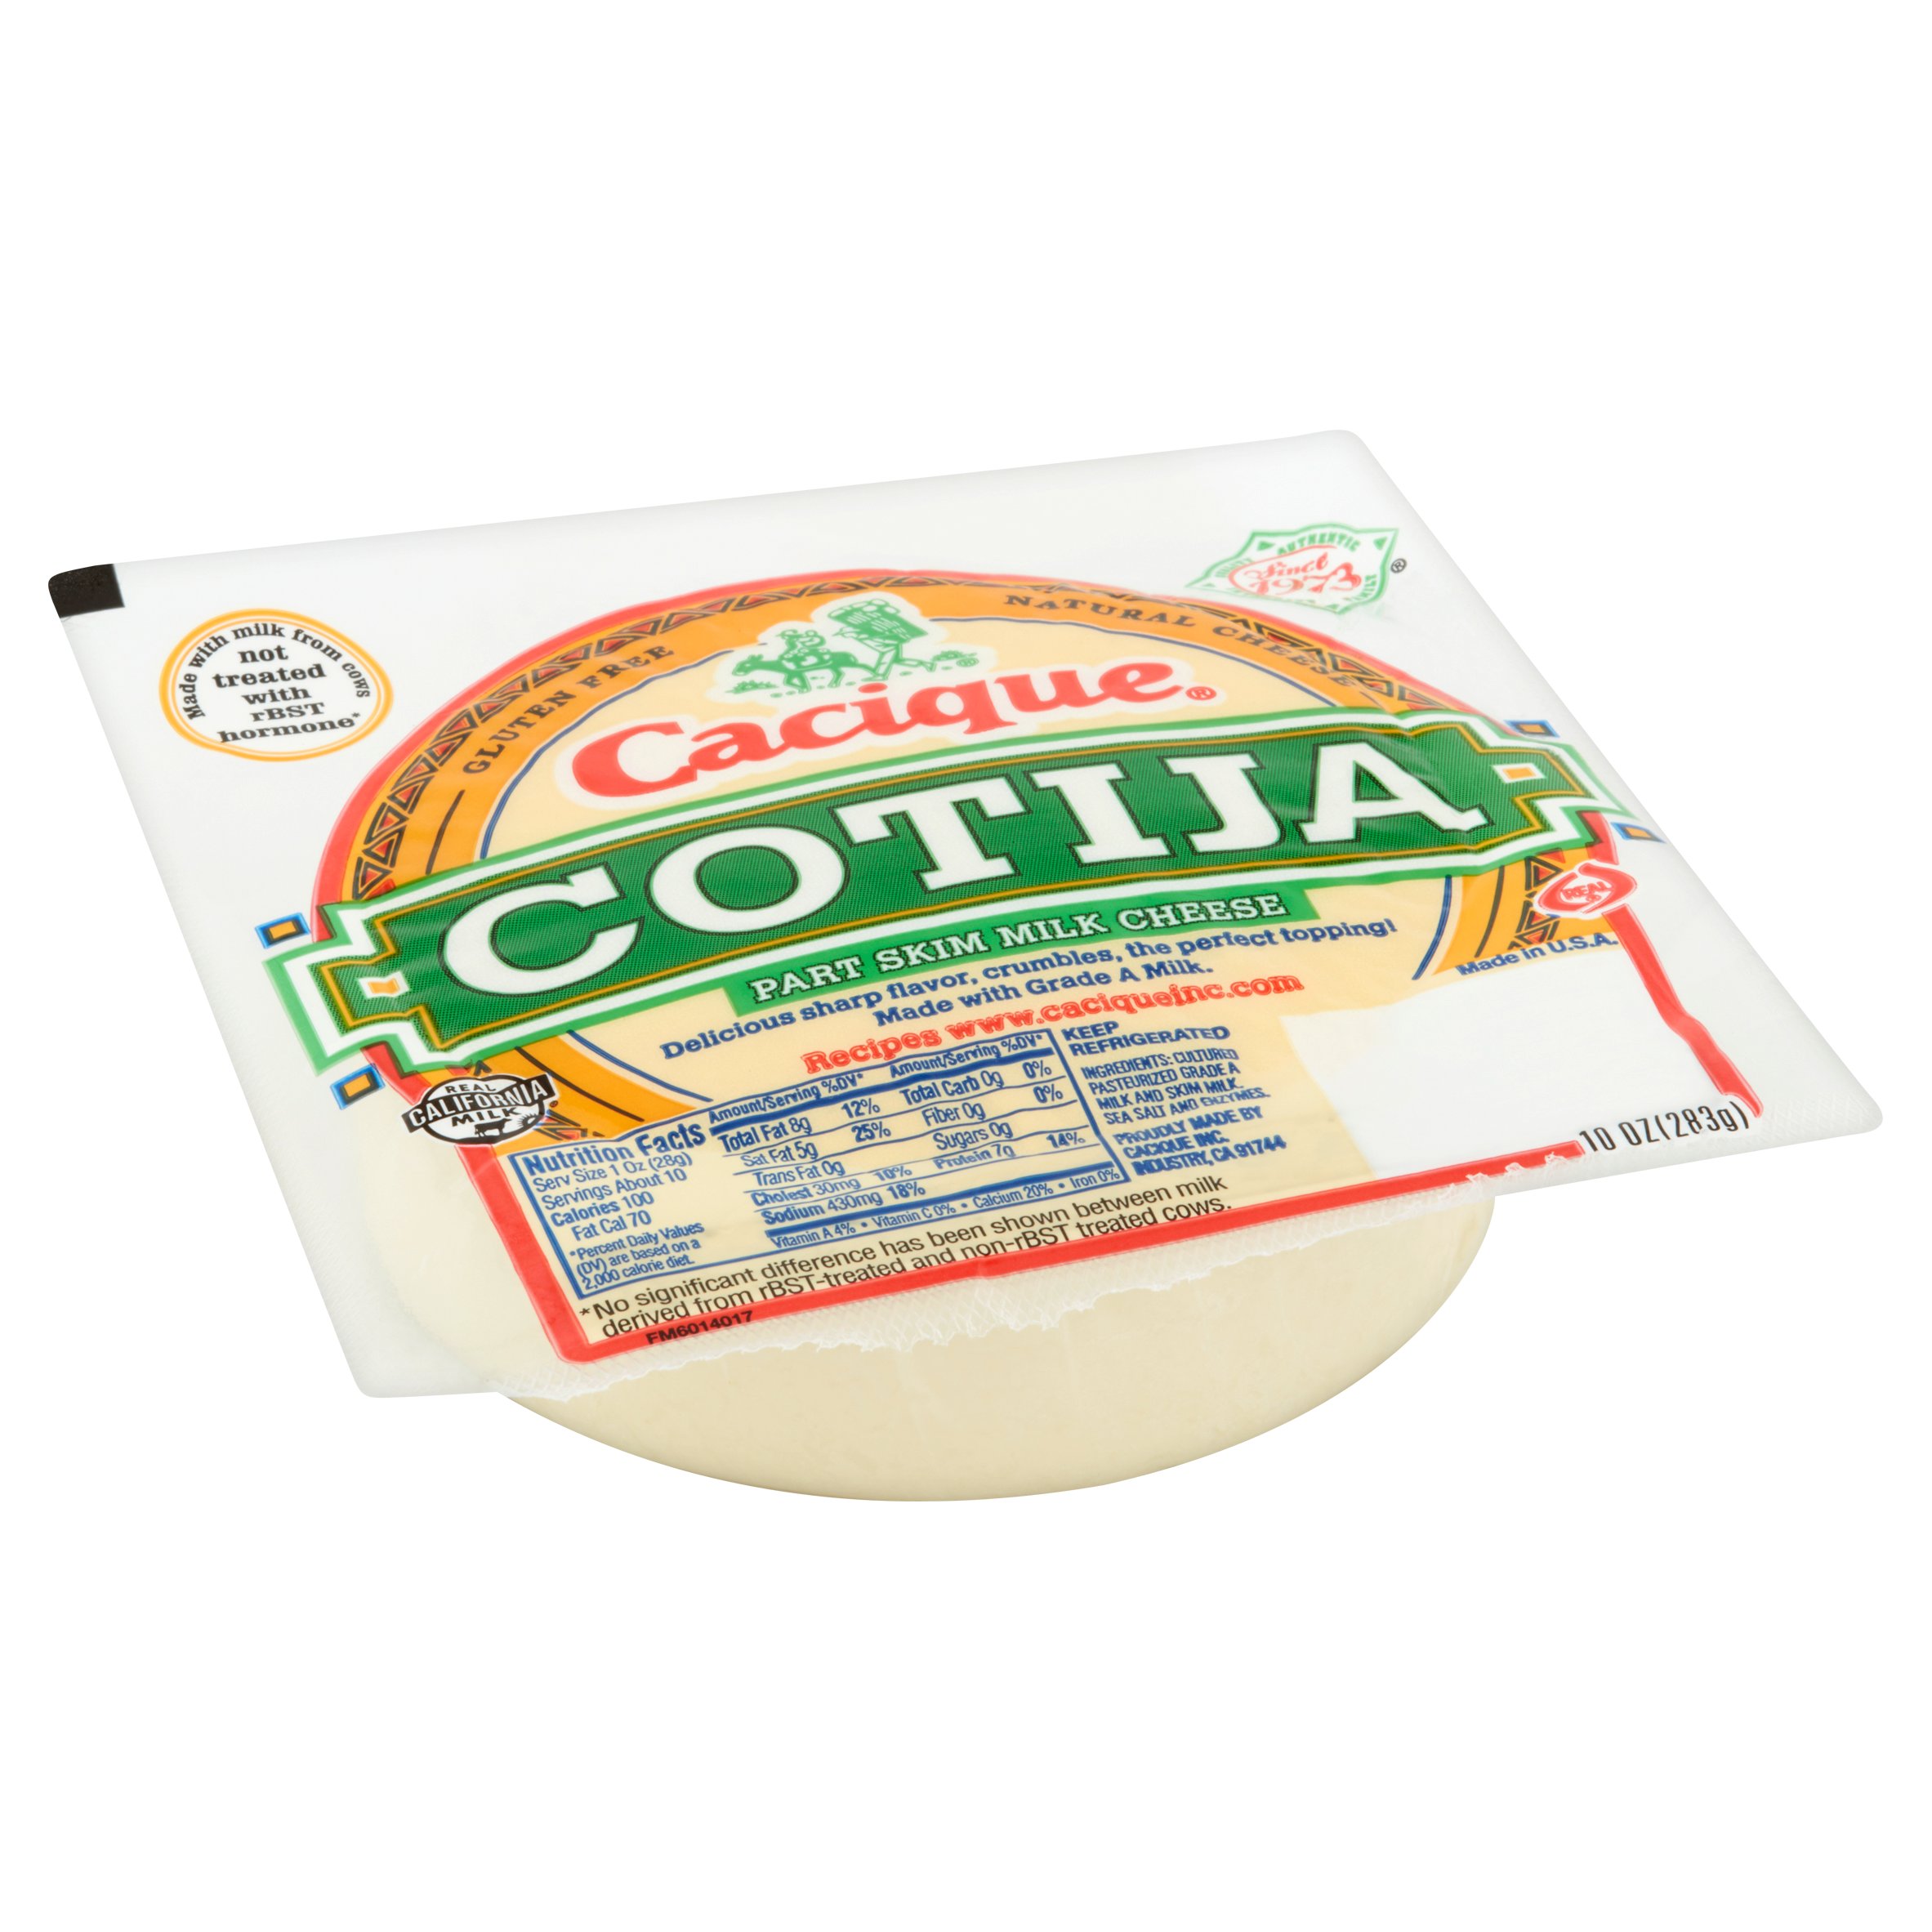 Cacique Cotija Cheese, 12 oz - image 2 of 6